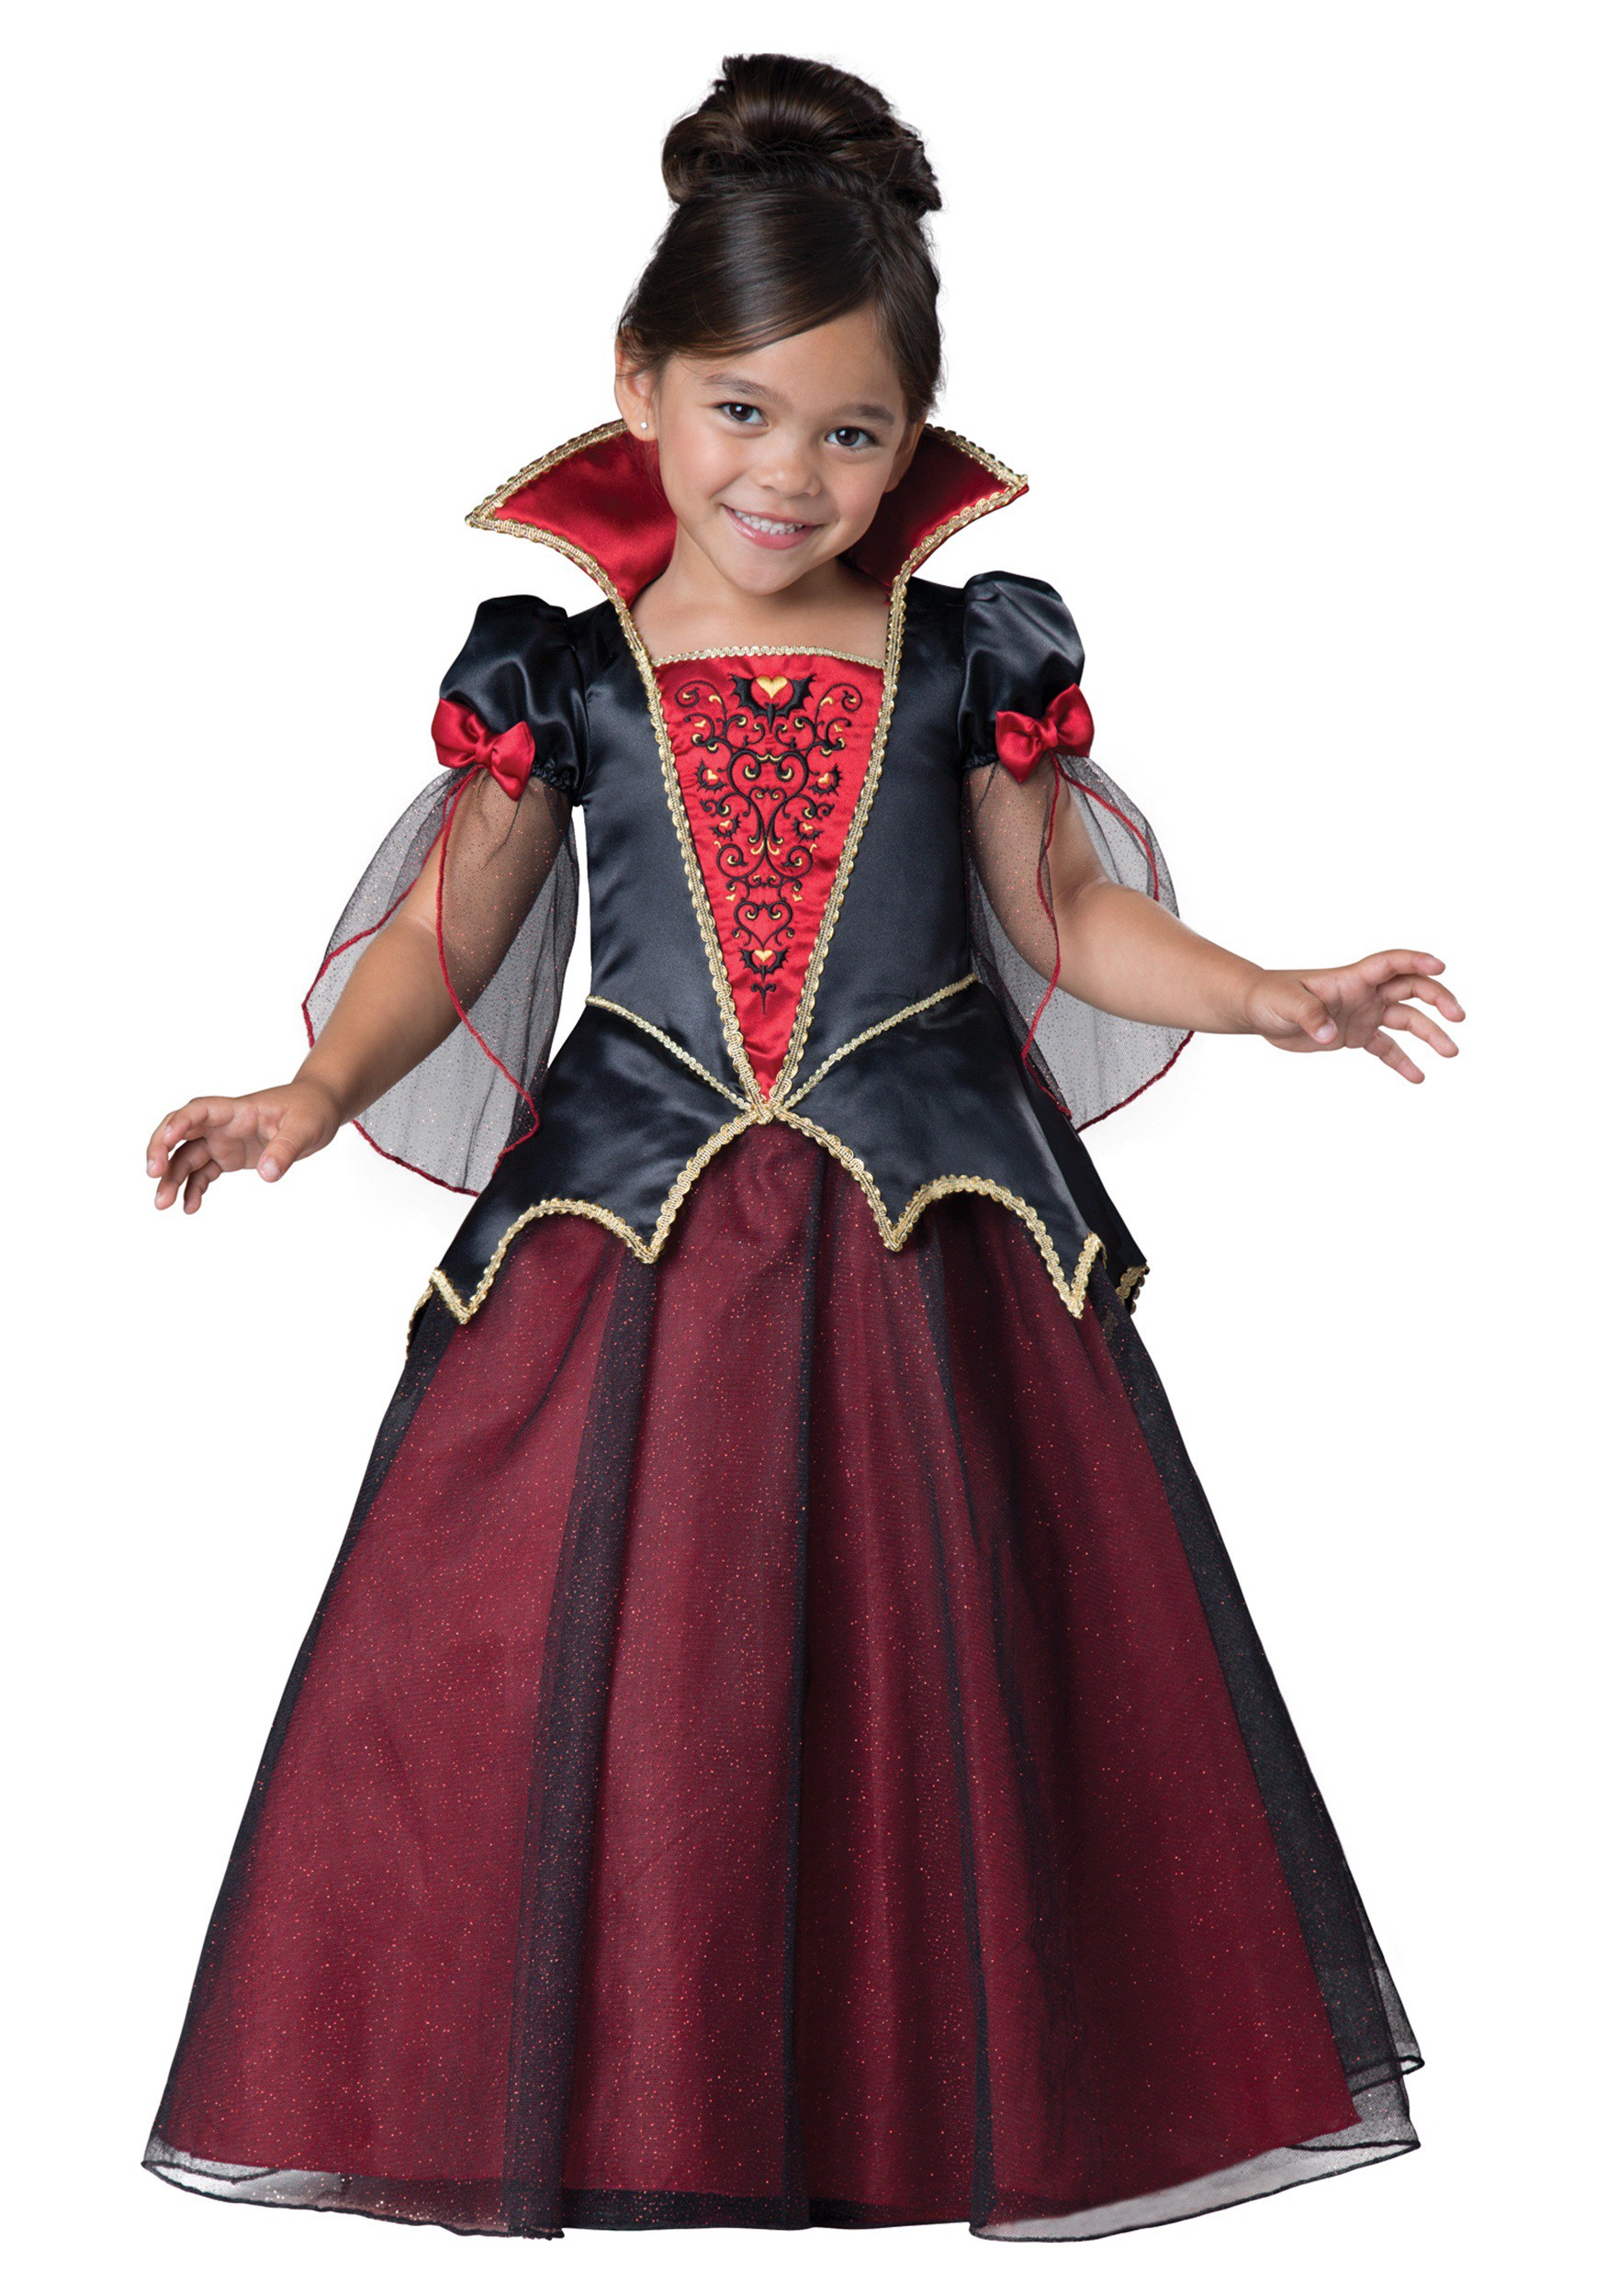 Toddler Vampiress Costume